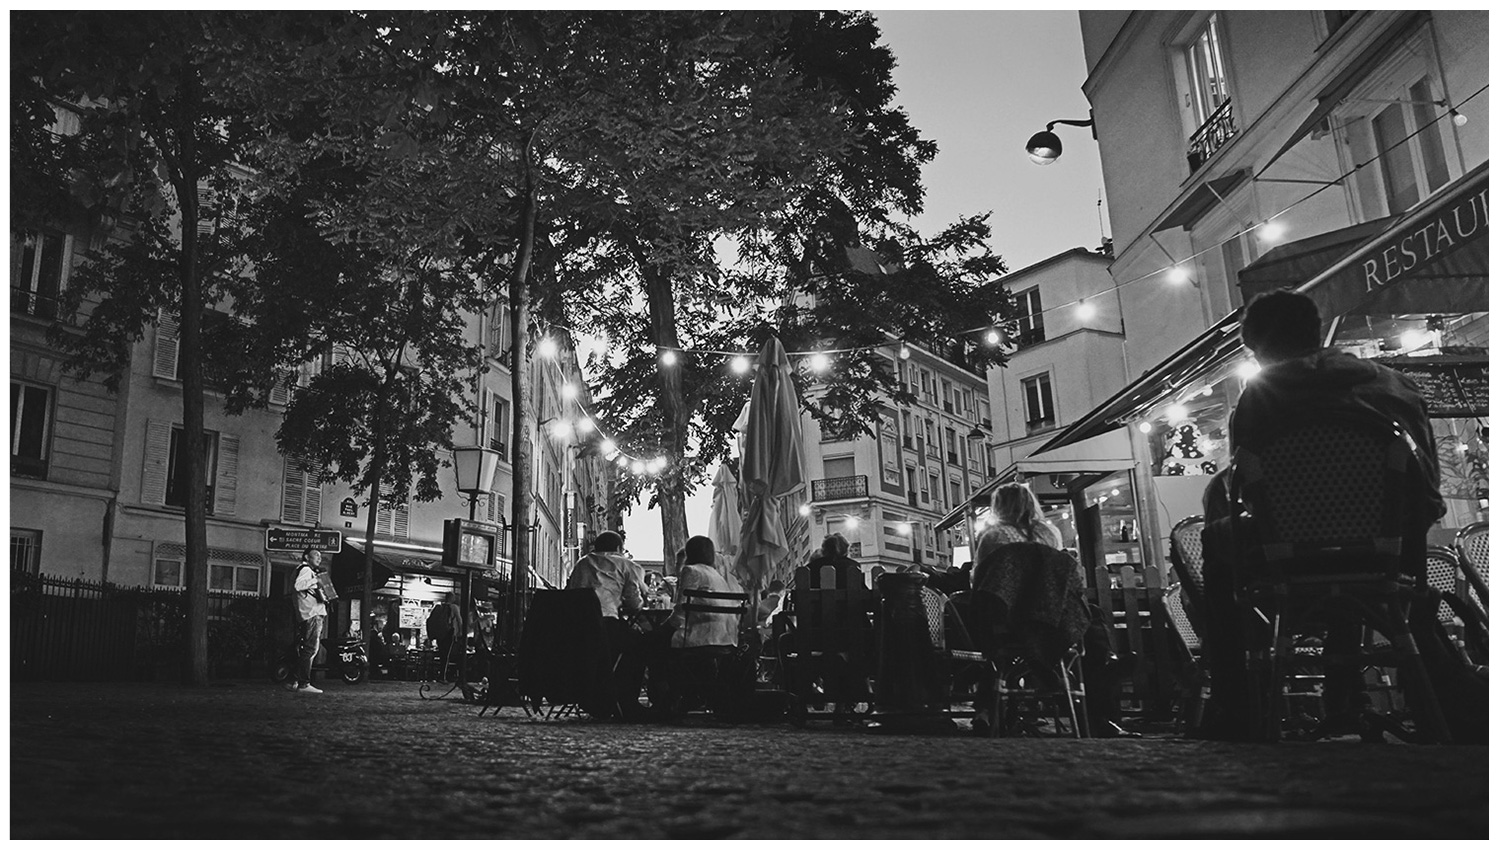 A Night in Montmartre